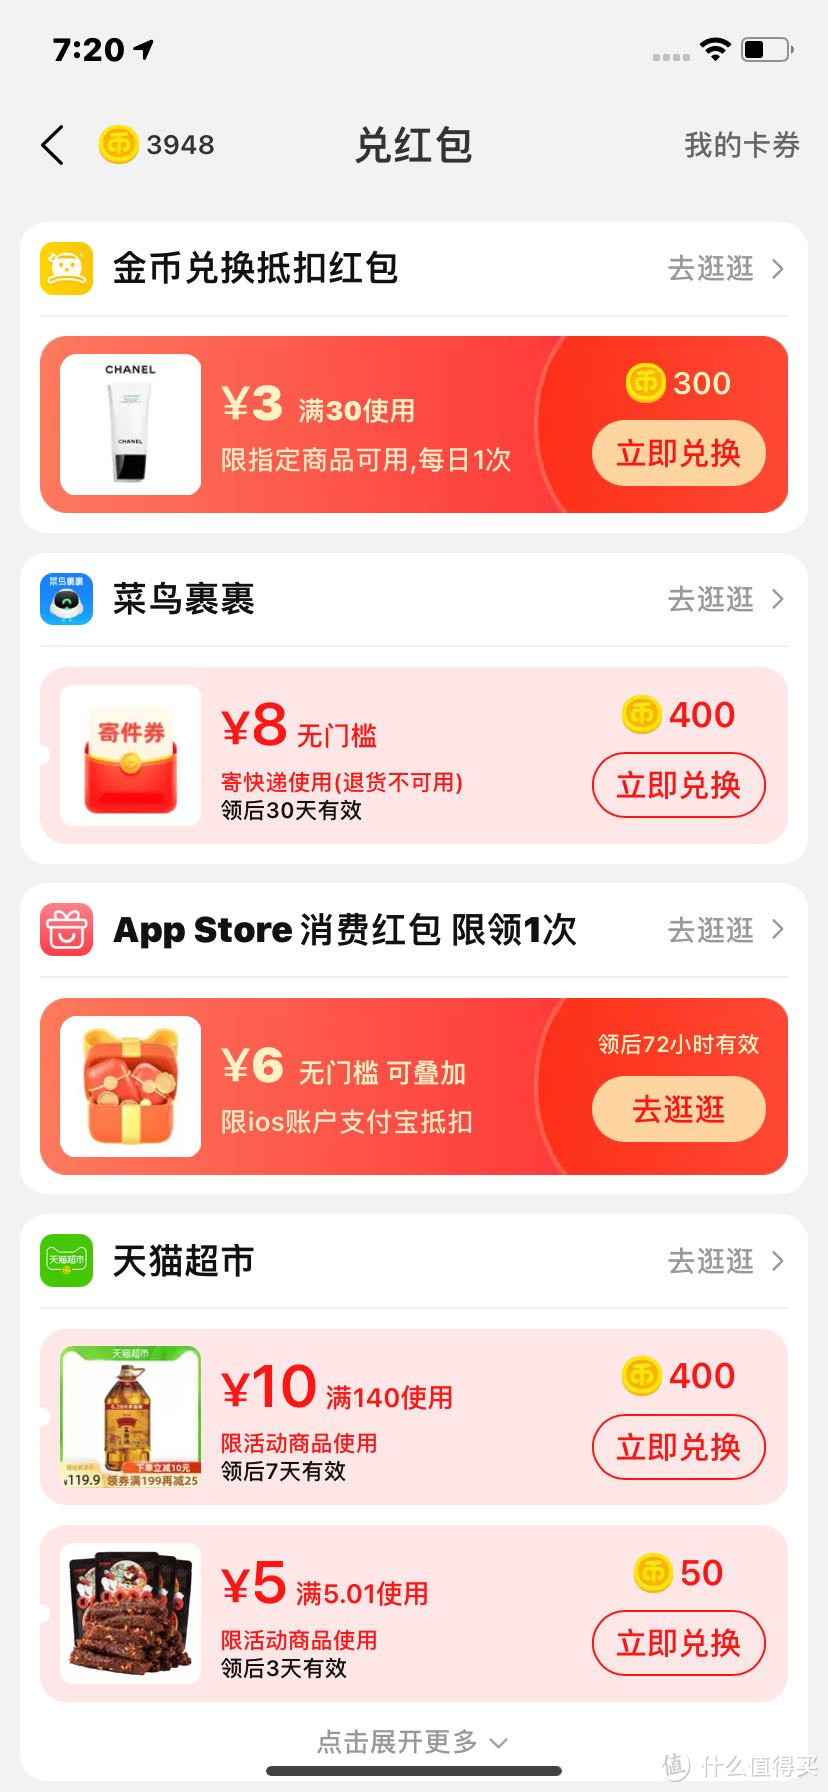 App store 6块无门槛消费红包